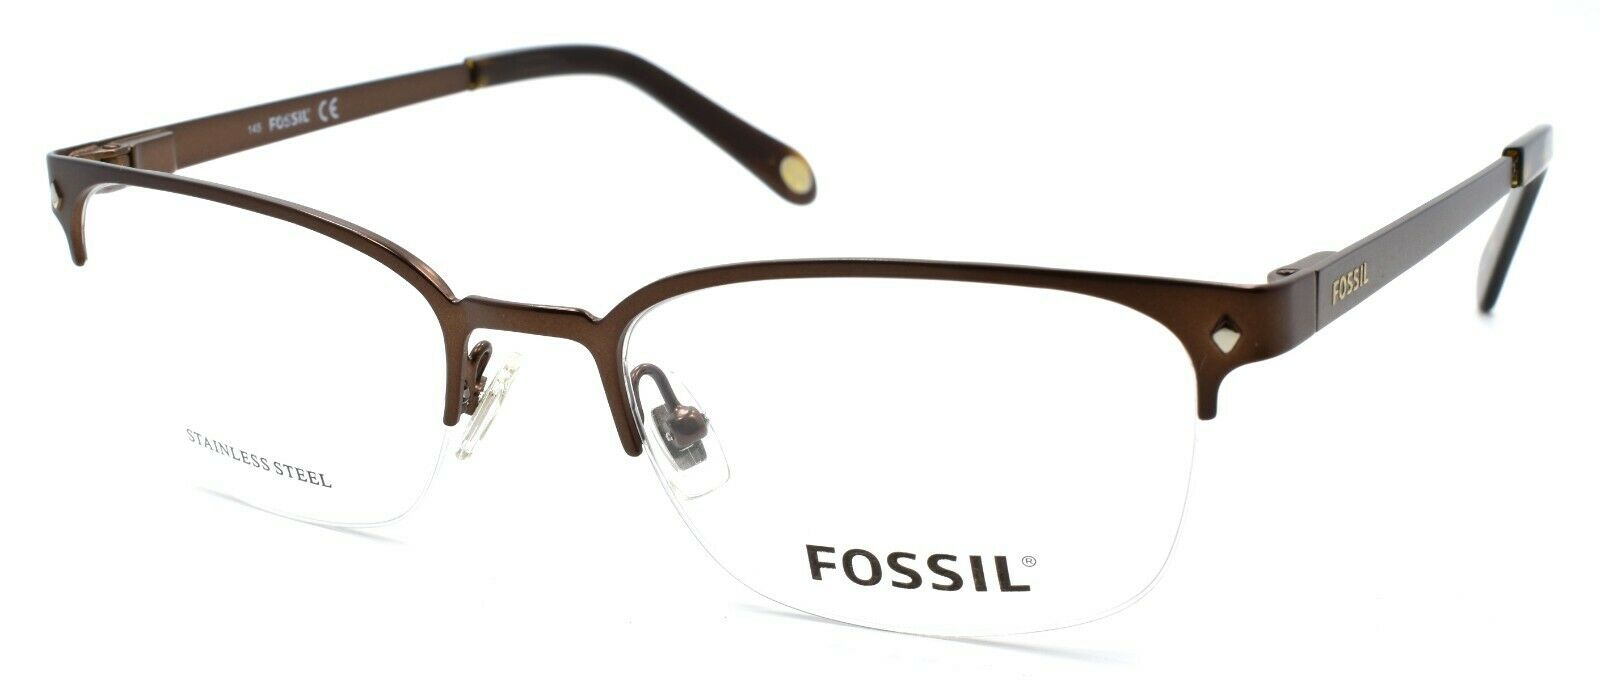 1-Fossil Will 05BZ Men's Glasses Frames Half-rim 52-19-145 Matte Chocolate Brown-716737556863-IKSpecs